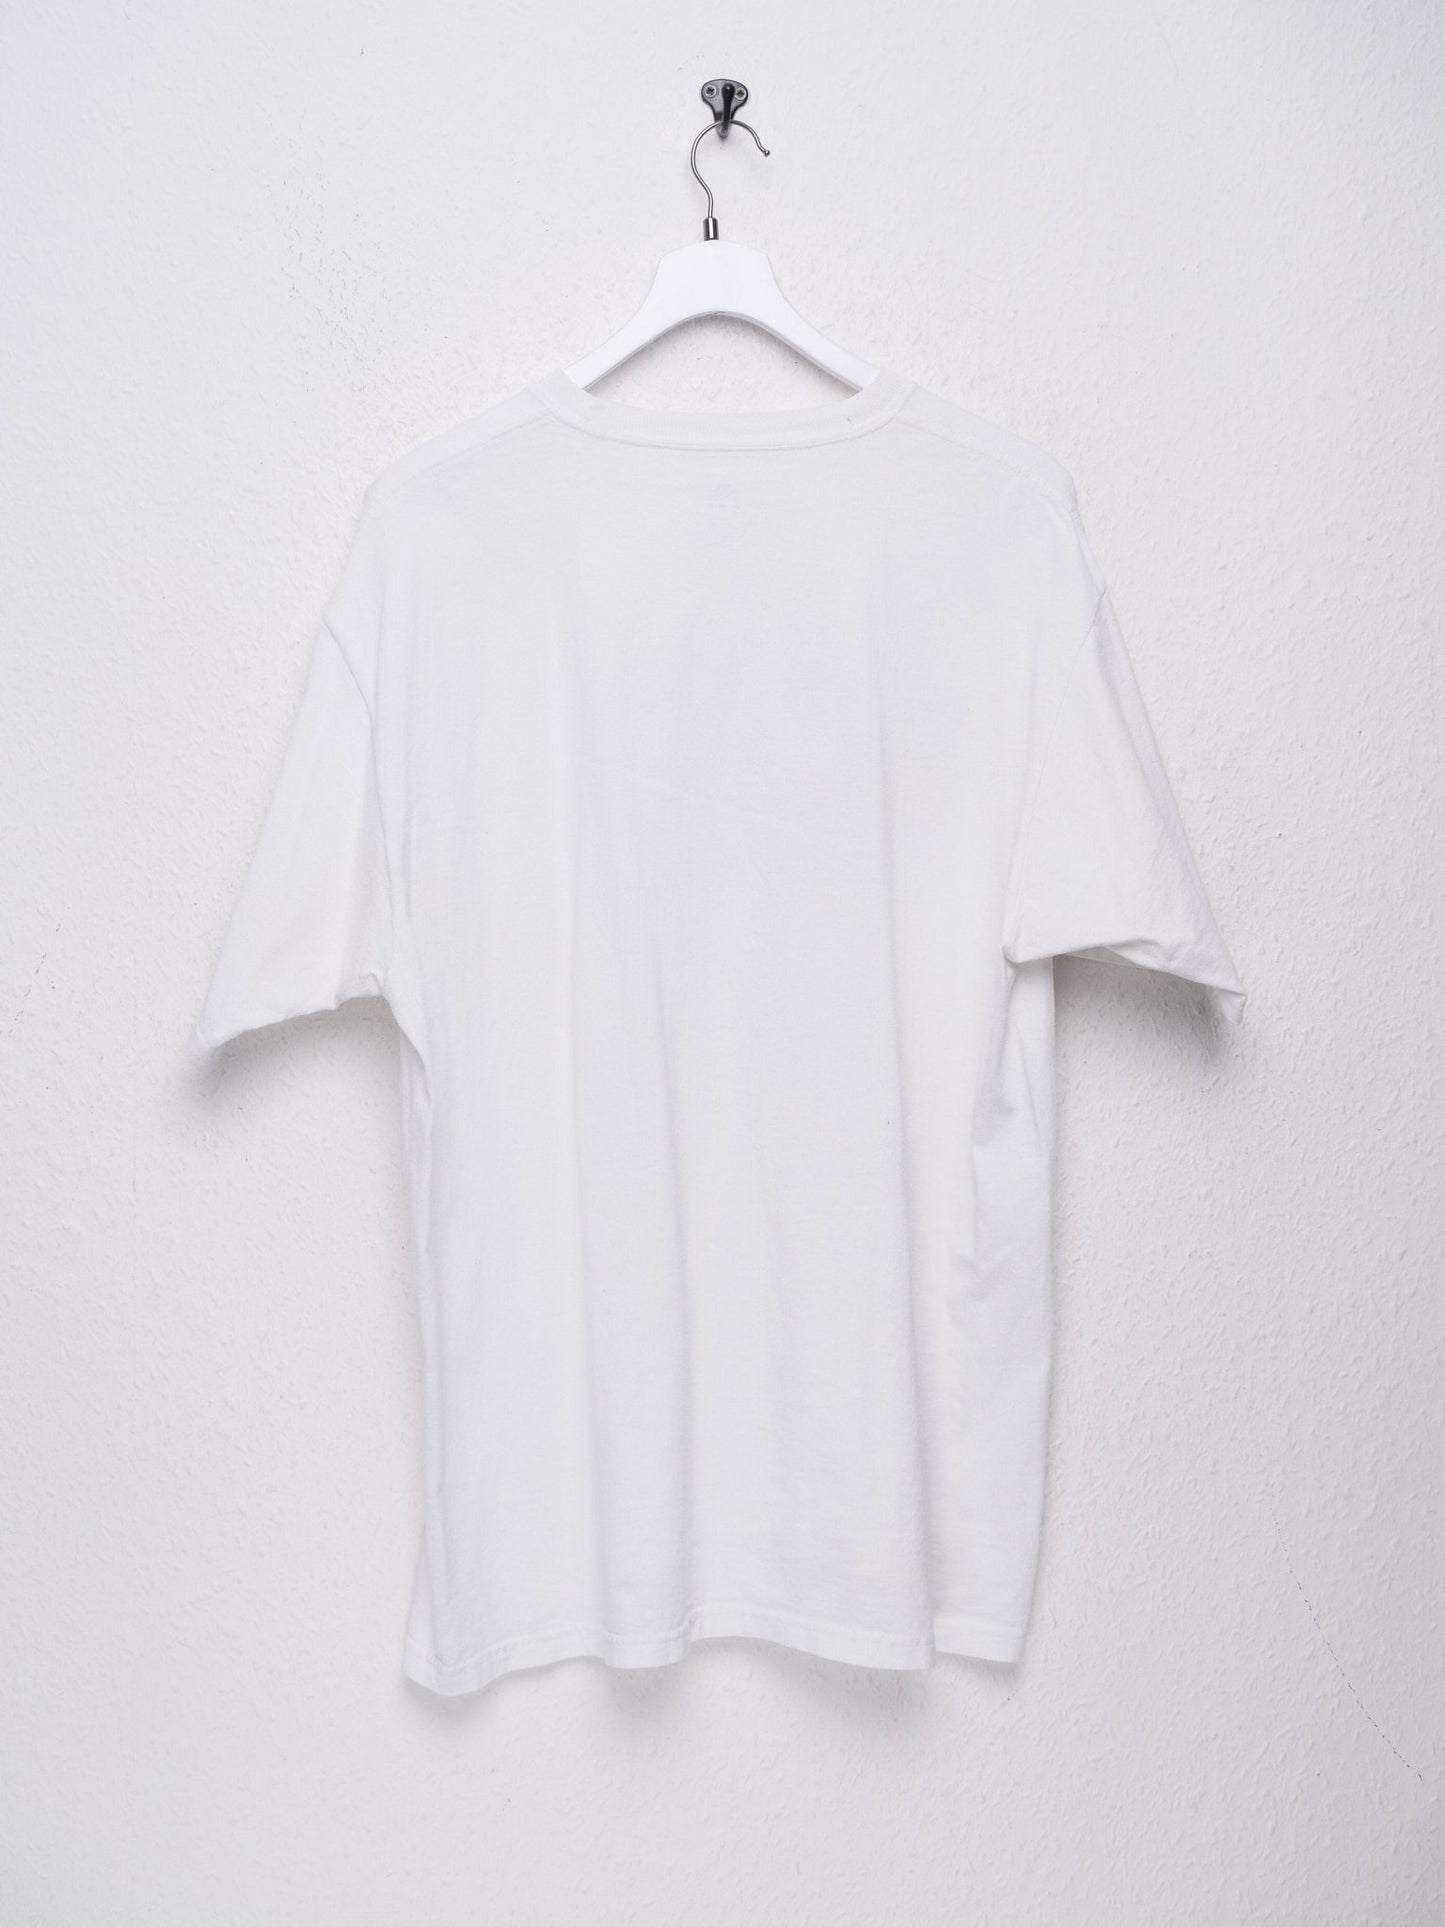 Adidas 'Lebron James' printed Graphic white Shirt - Peeces